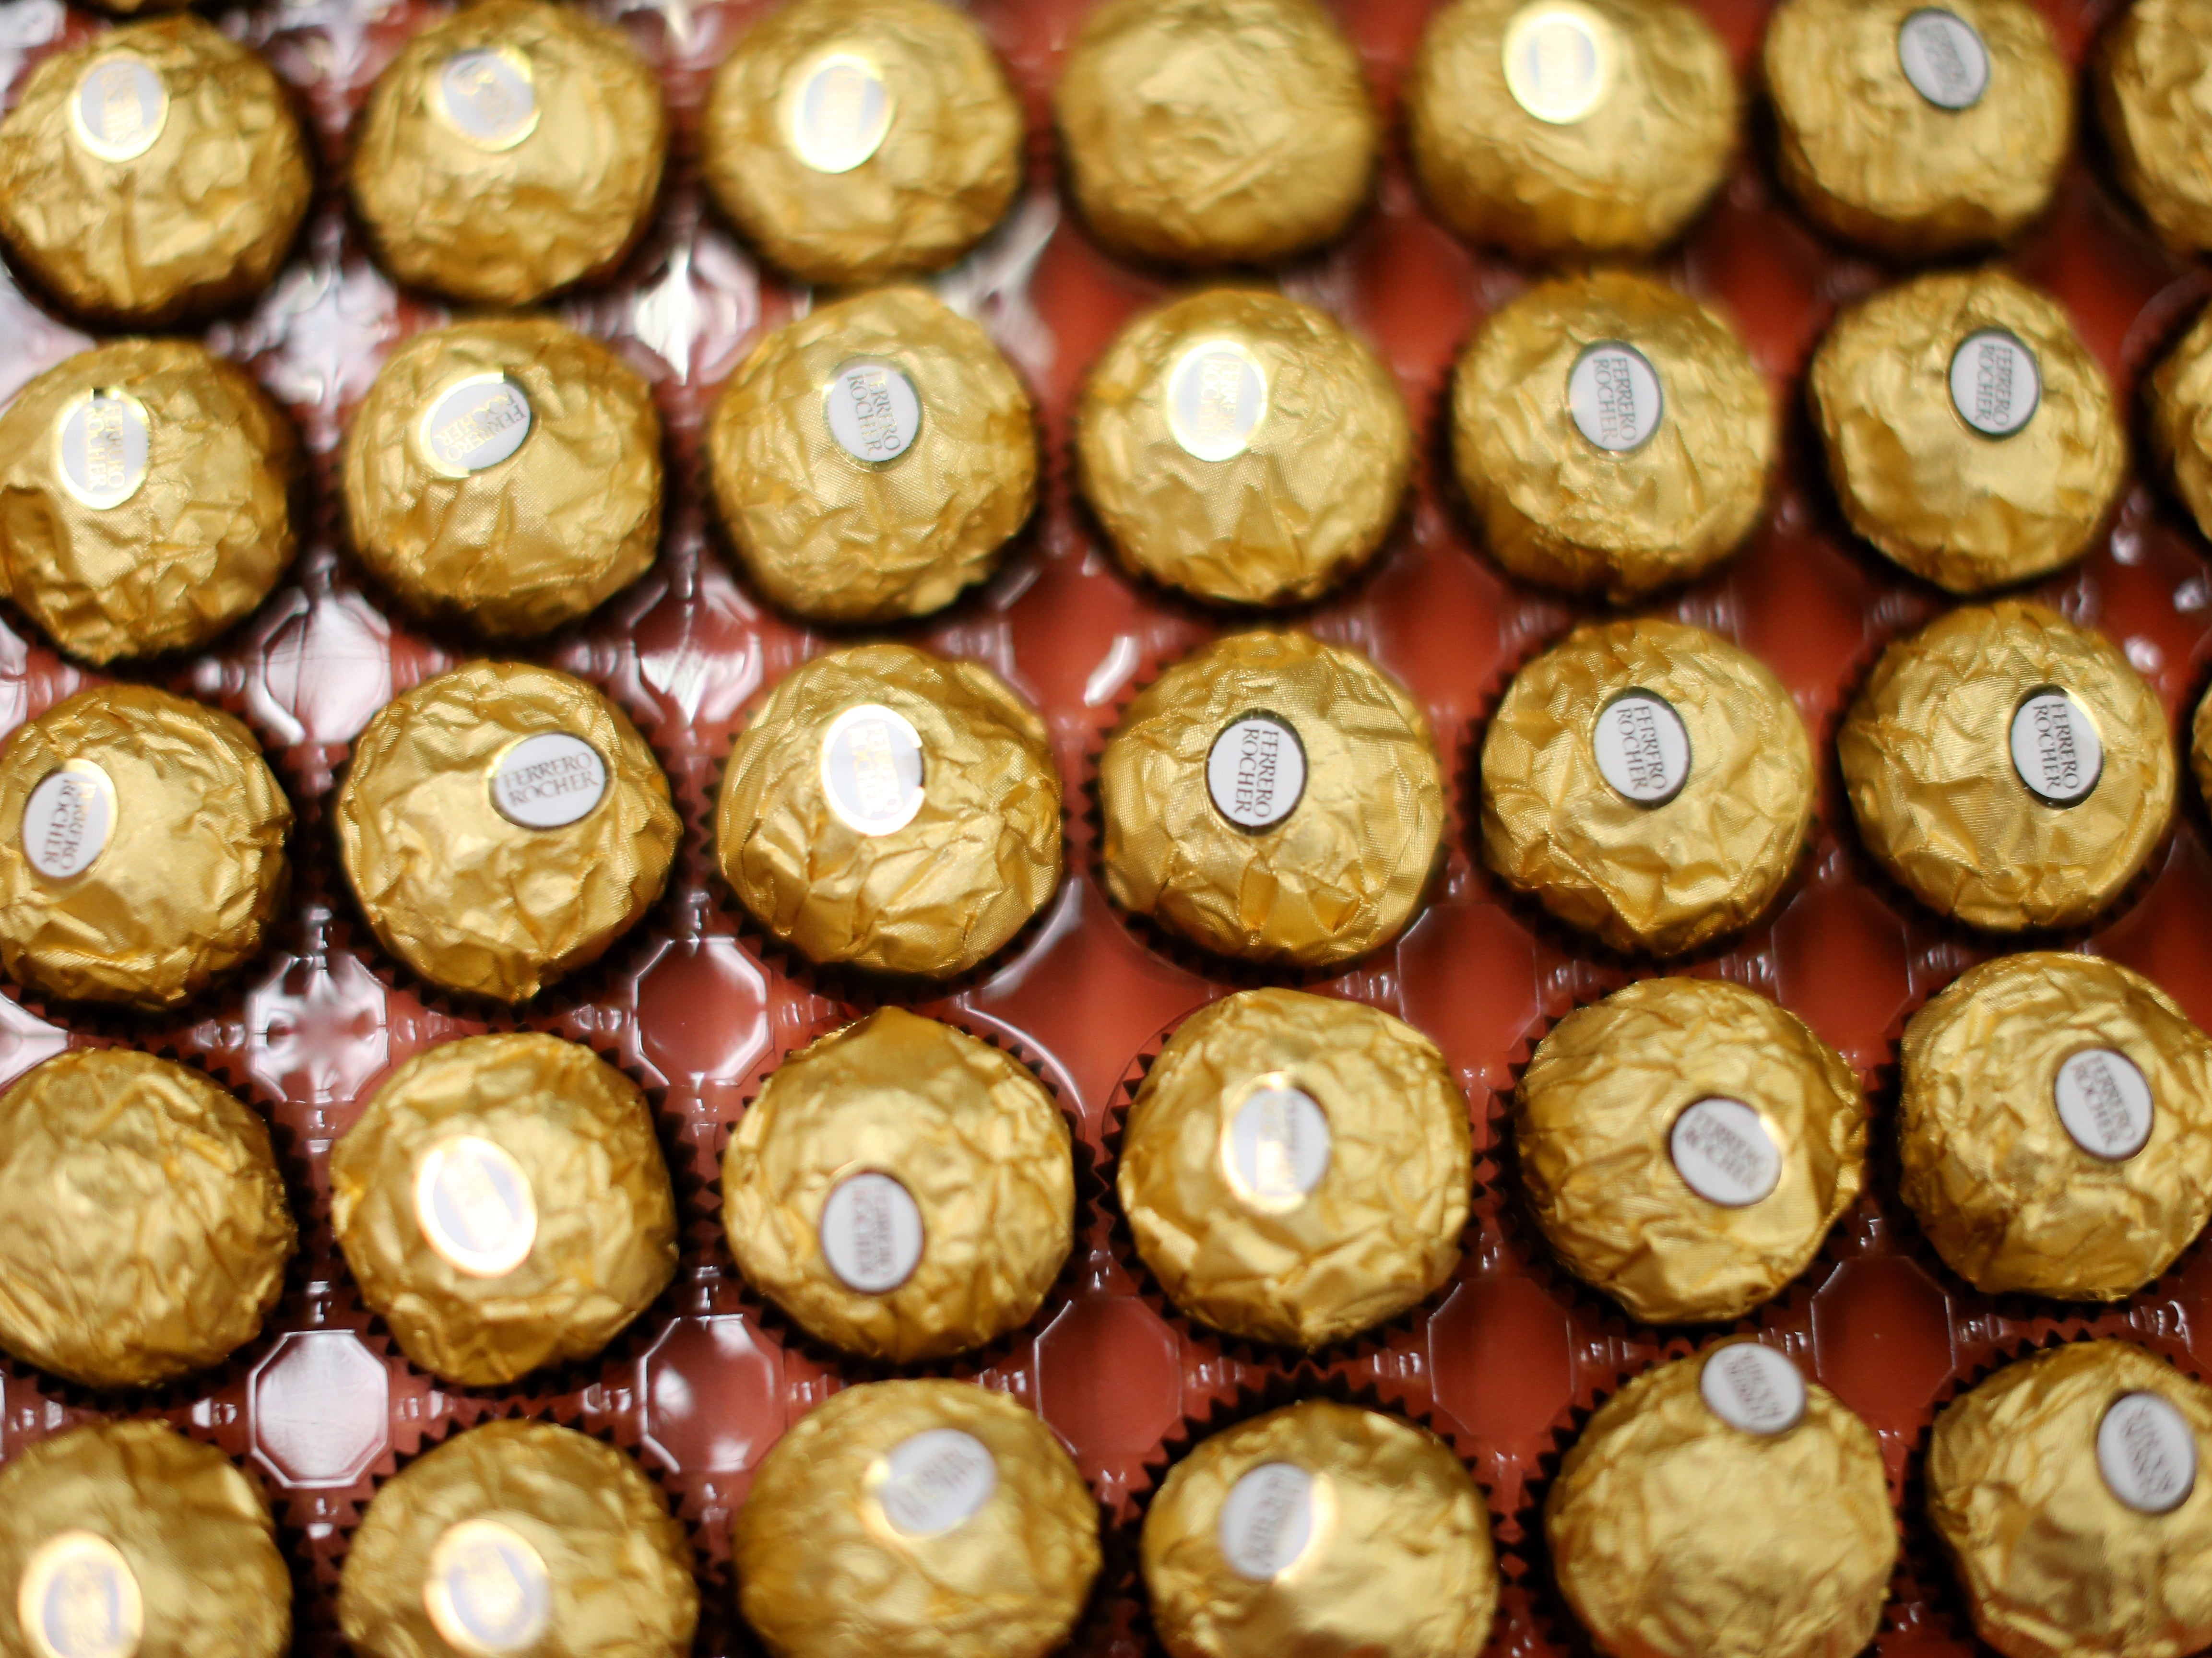 Ferrero's chocolate bars to arrive in the UK - Italianfood.net